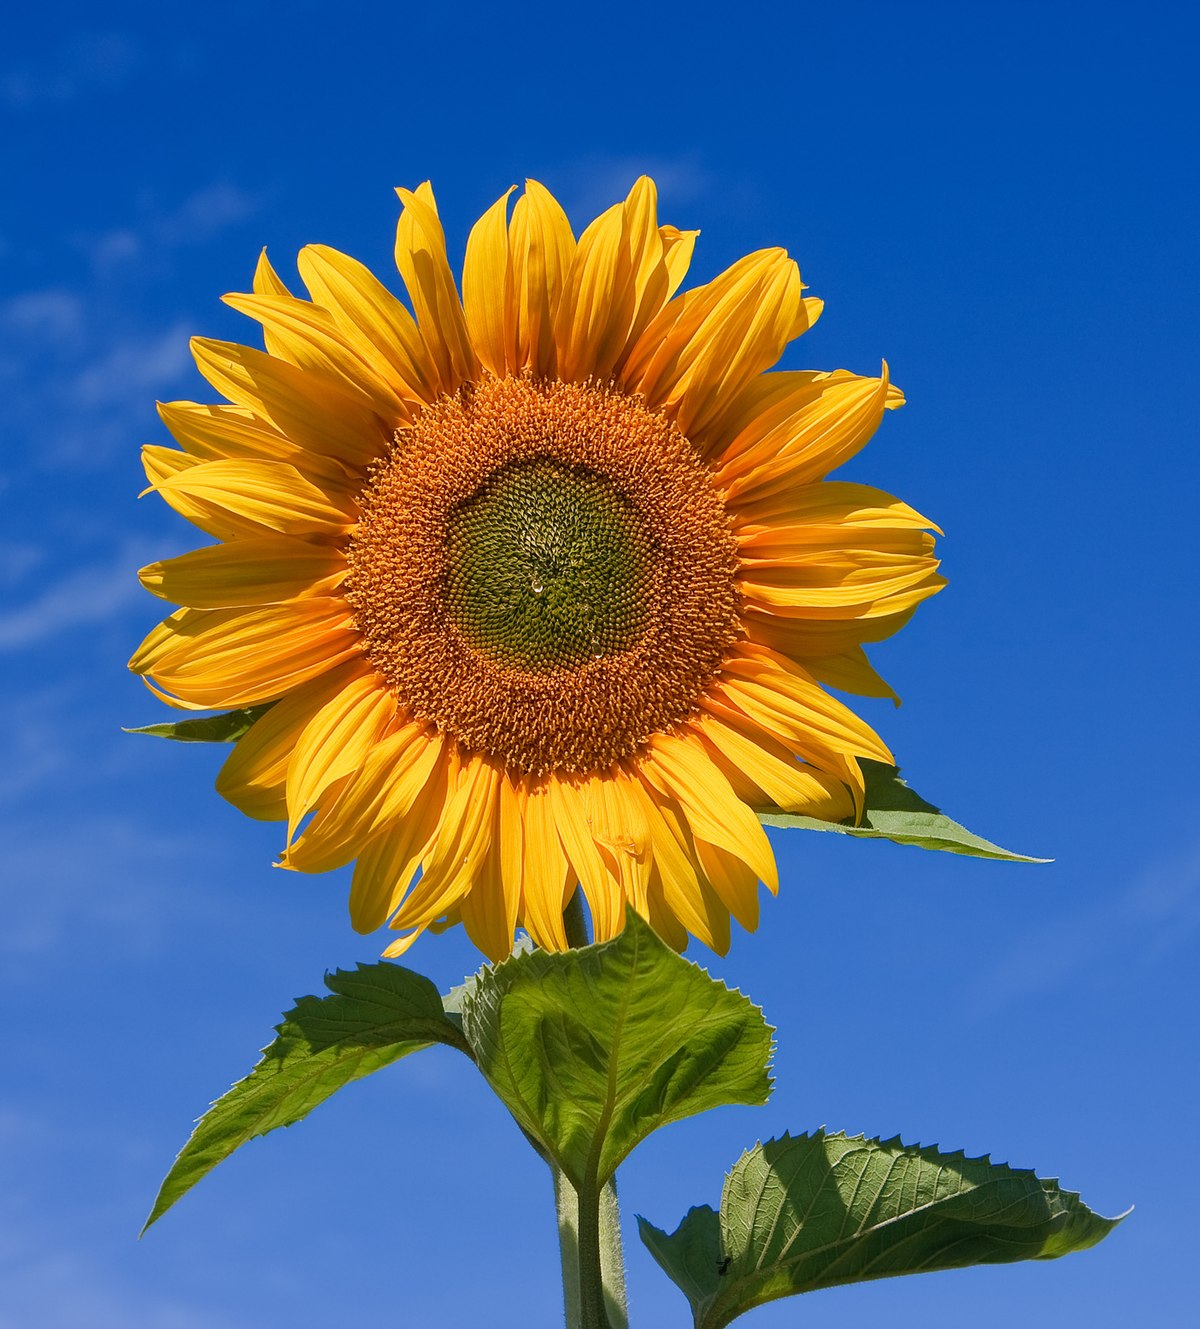 Common sunflower - Wikipedia